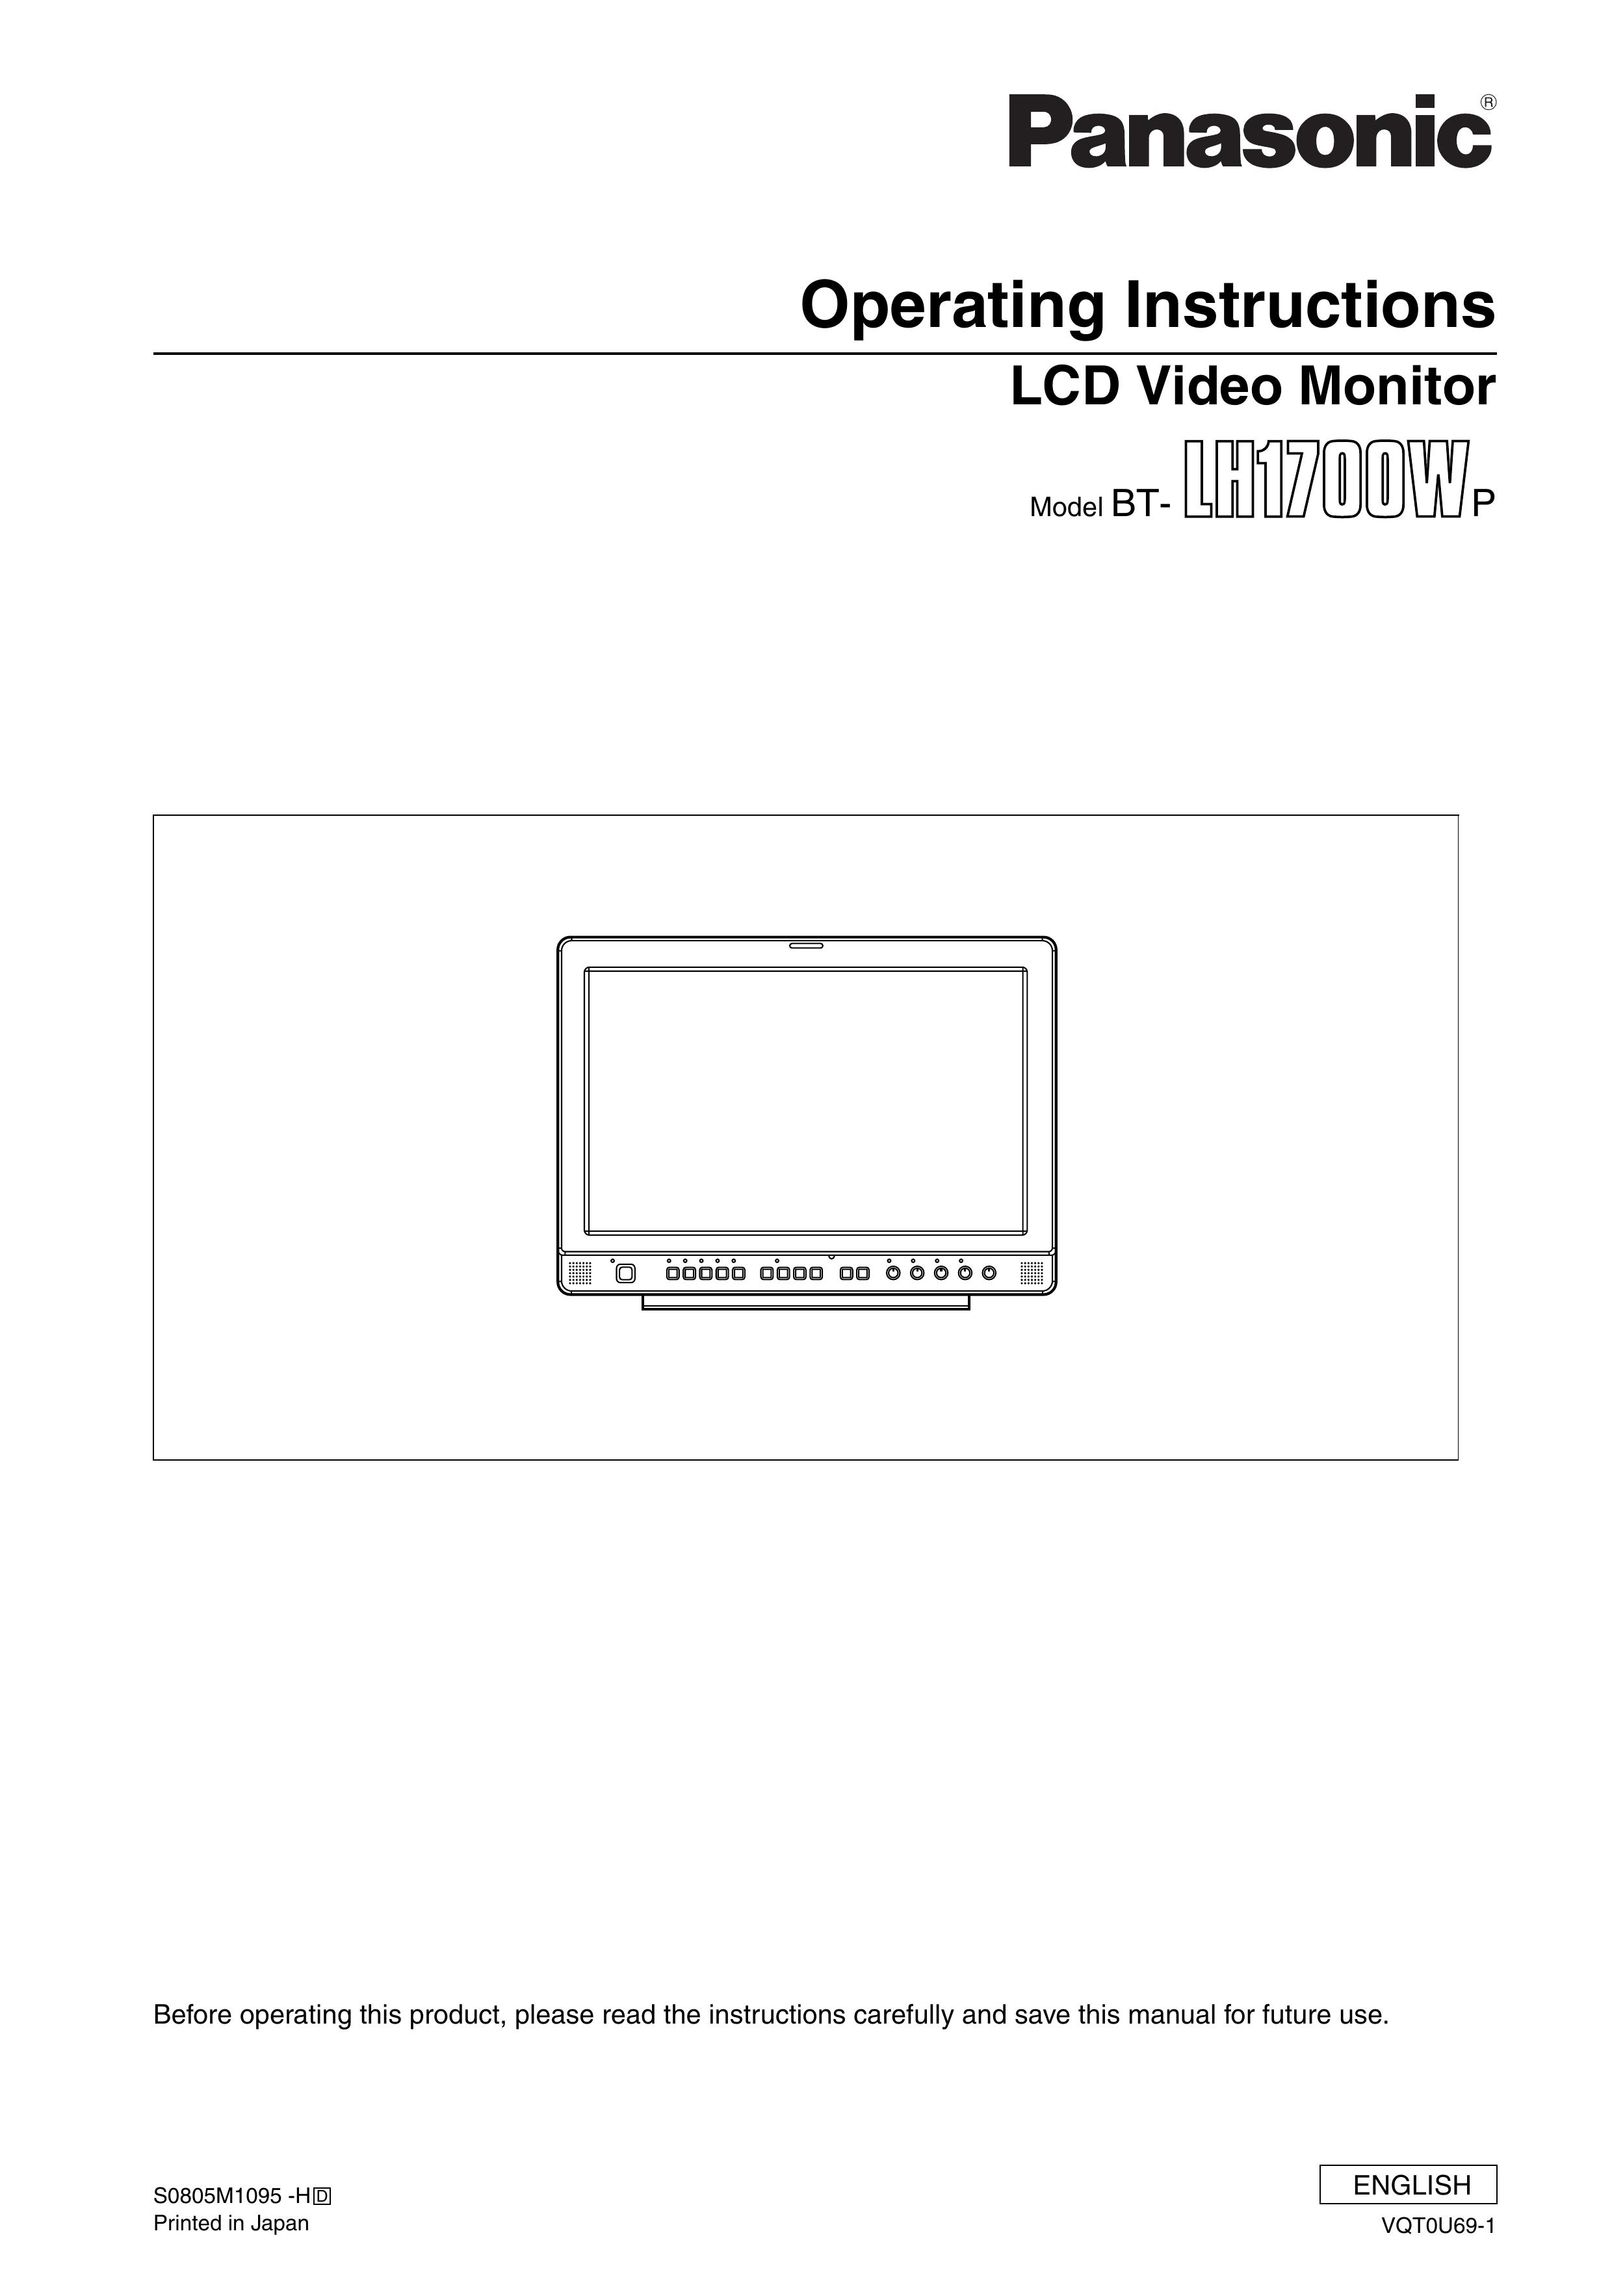 Panasonic BT-LH1700WP Car Video System User Manual